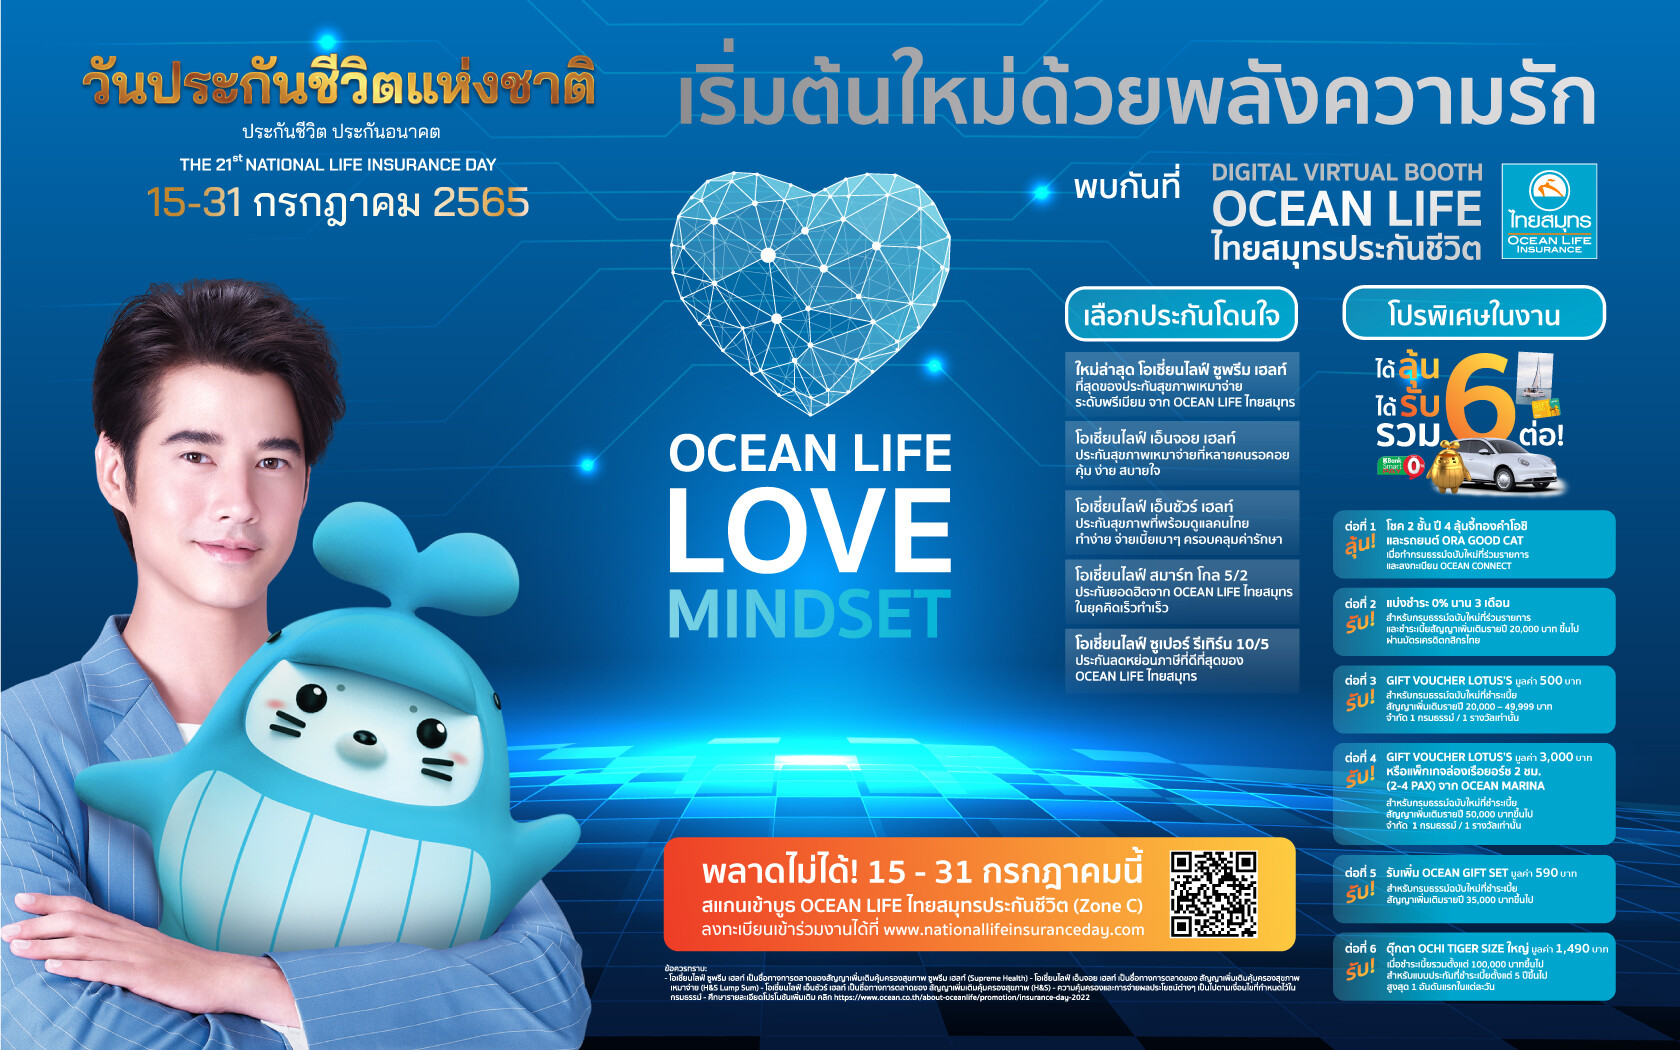 OCEAN LIFE ไทยสมุทร เปิด Digital Virtual Booth ชวนคนไทยเริ่มต้นใหม่ด้วยพลังความรัก ในงาน "วันประกันชีวิตแห่งชาติ ครั้งที่ 21"